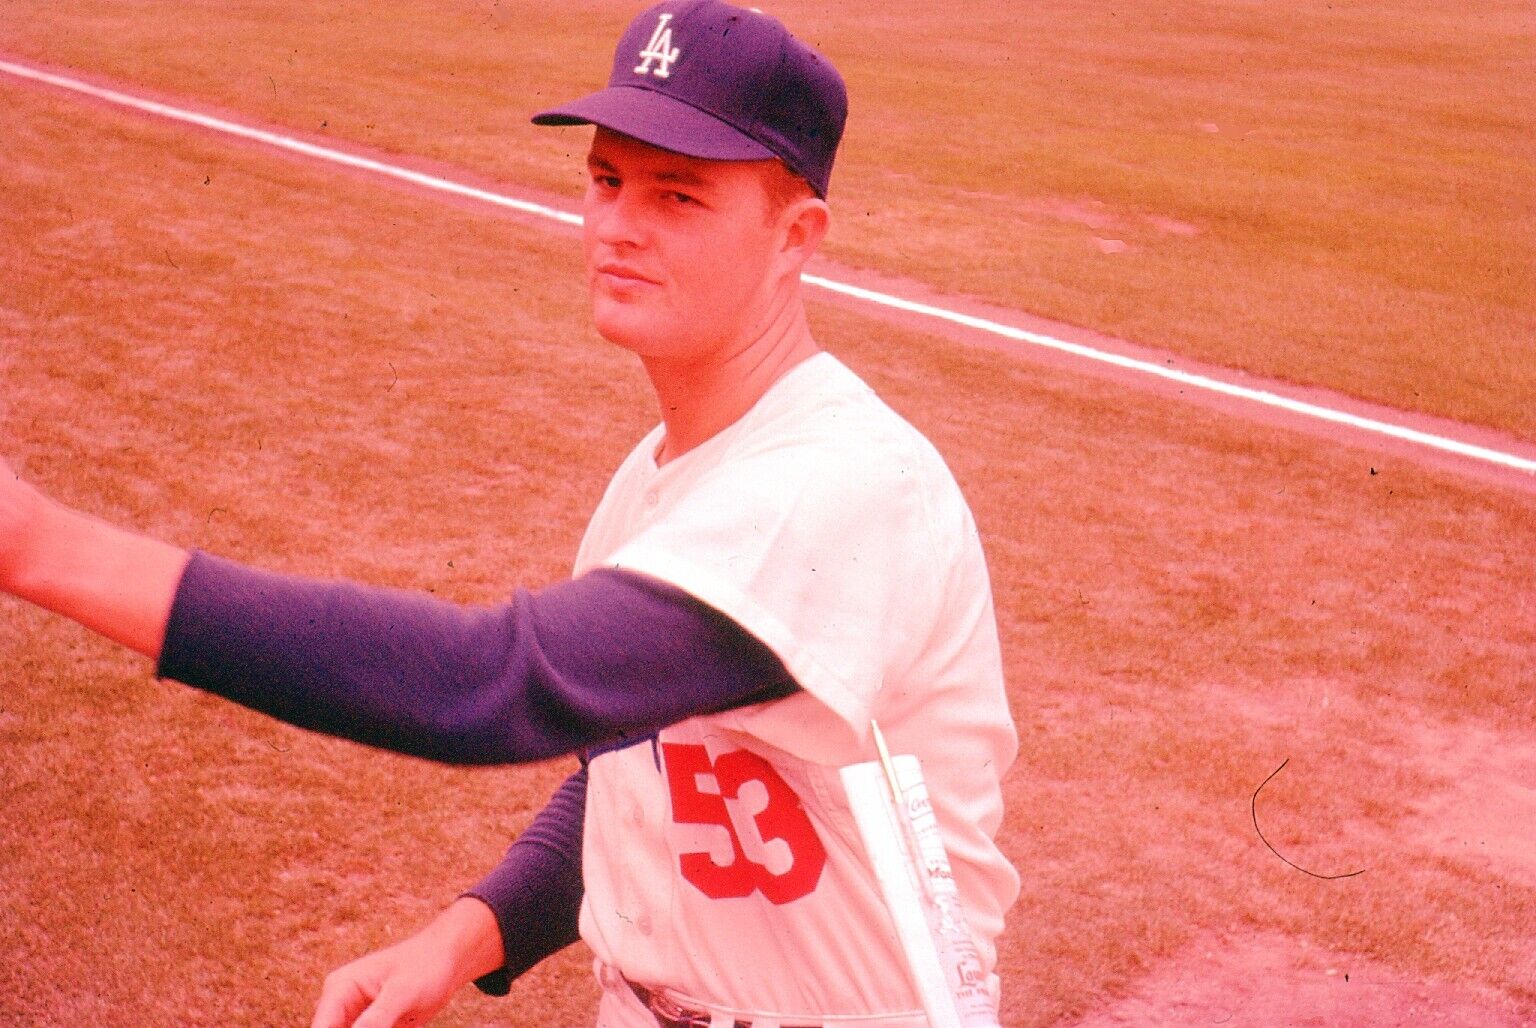 L A Dodgers Don Drysdale - Pitcher - April 19, 1959 - 35MM Slide